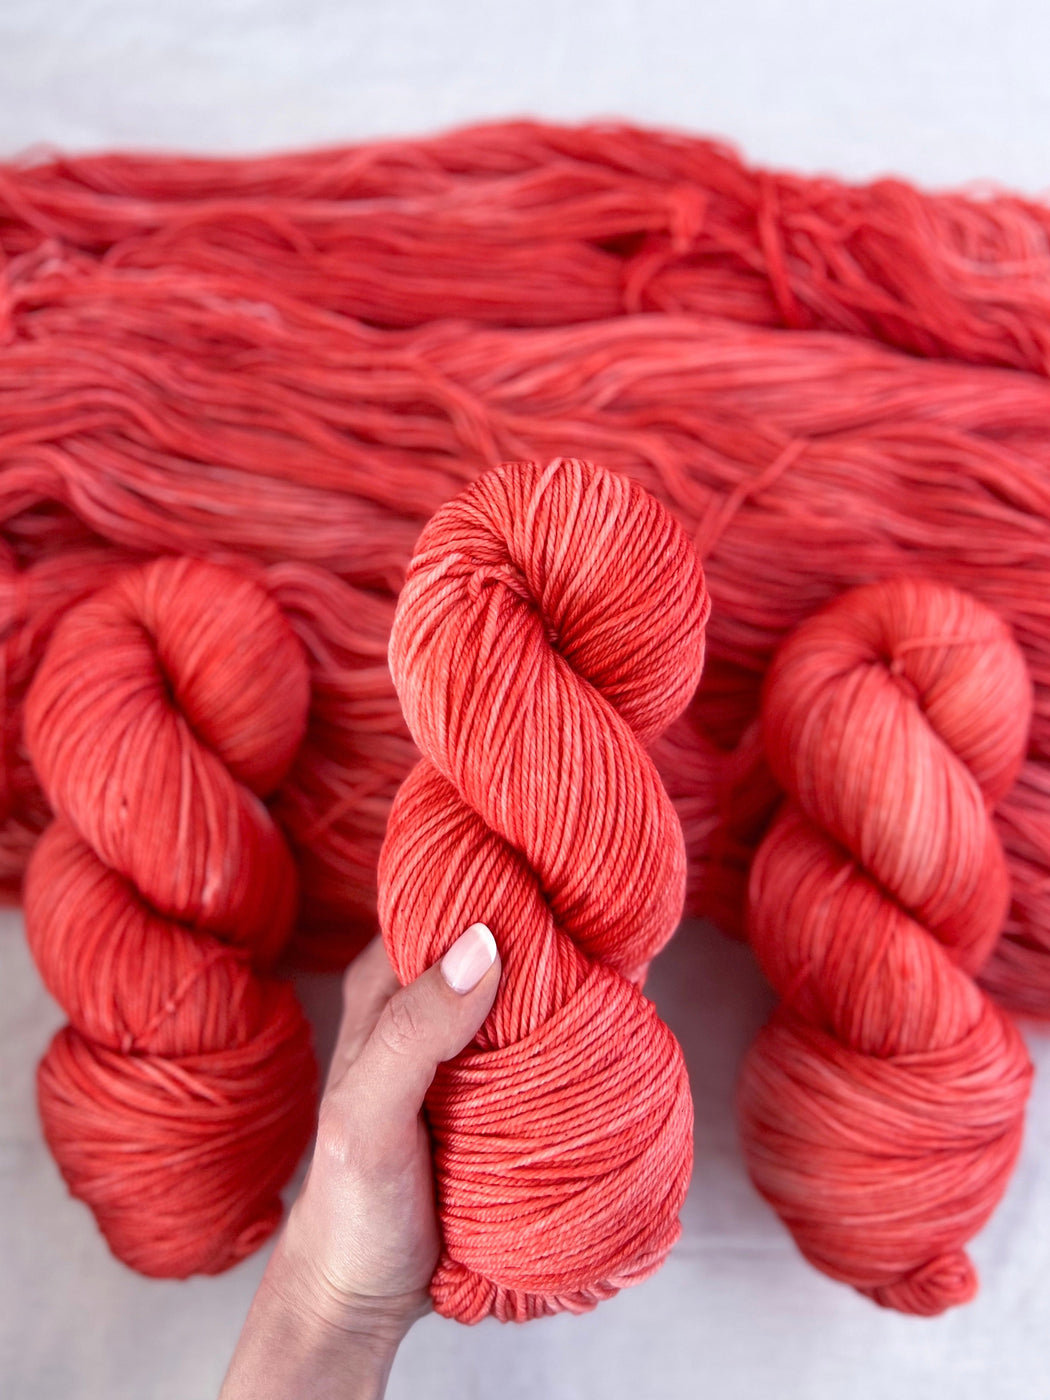 Marmalade - Ruby and Roses Yarn - Hand Dyed Yarn